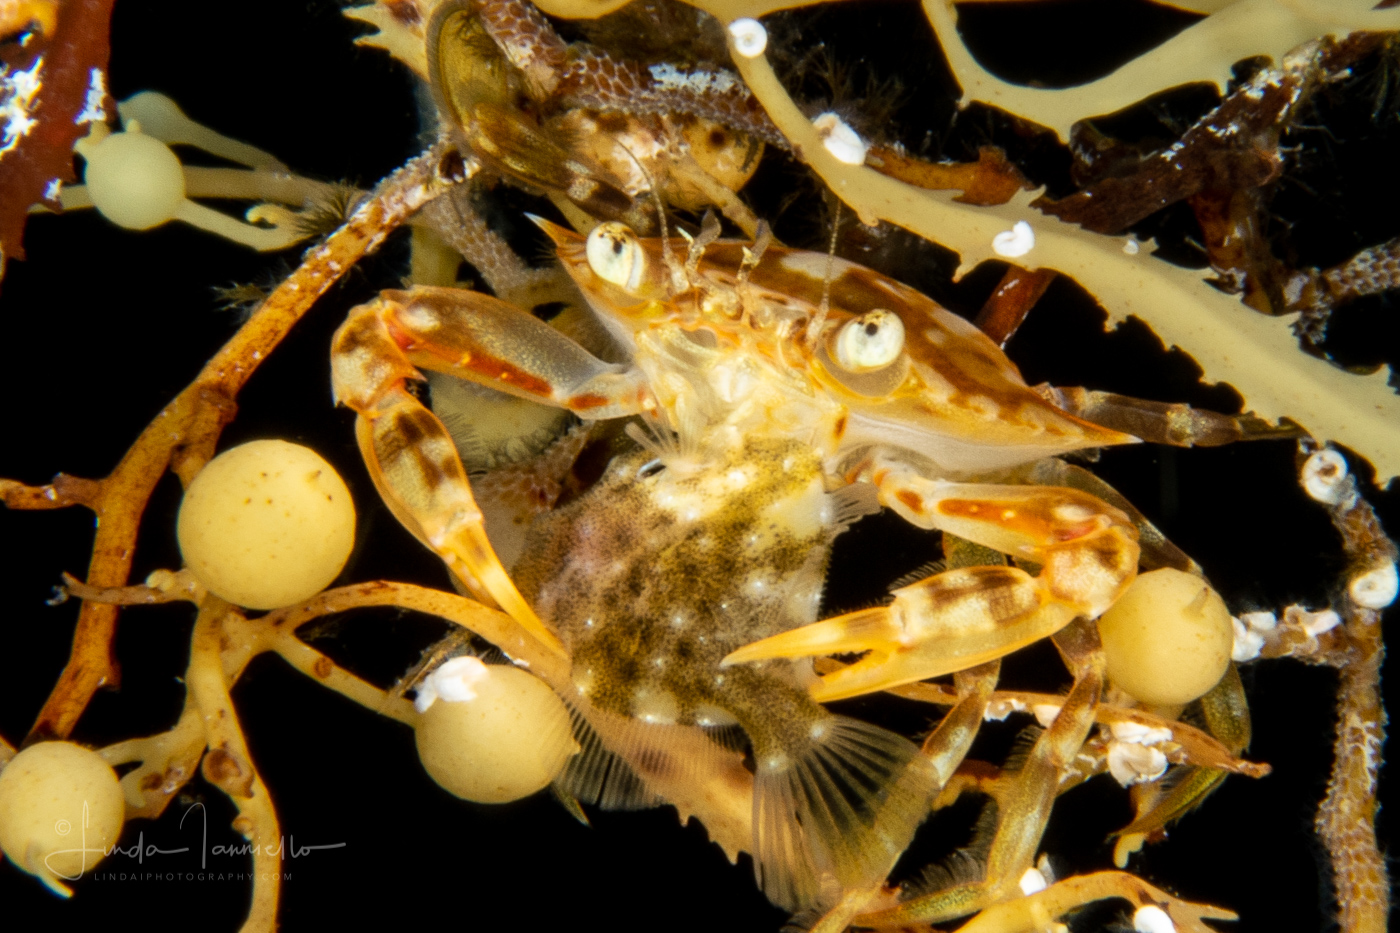 Sargassum Swimming Crab - Portunidae Family - Portunus sayi - Preying on small Planehead Filefish